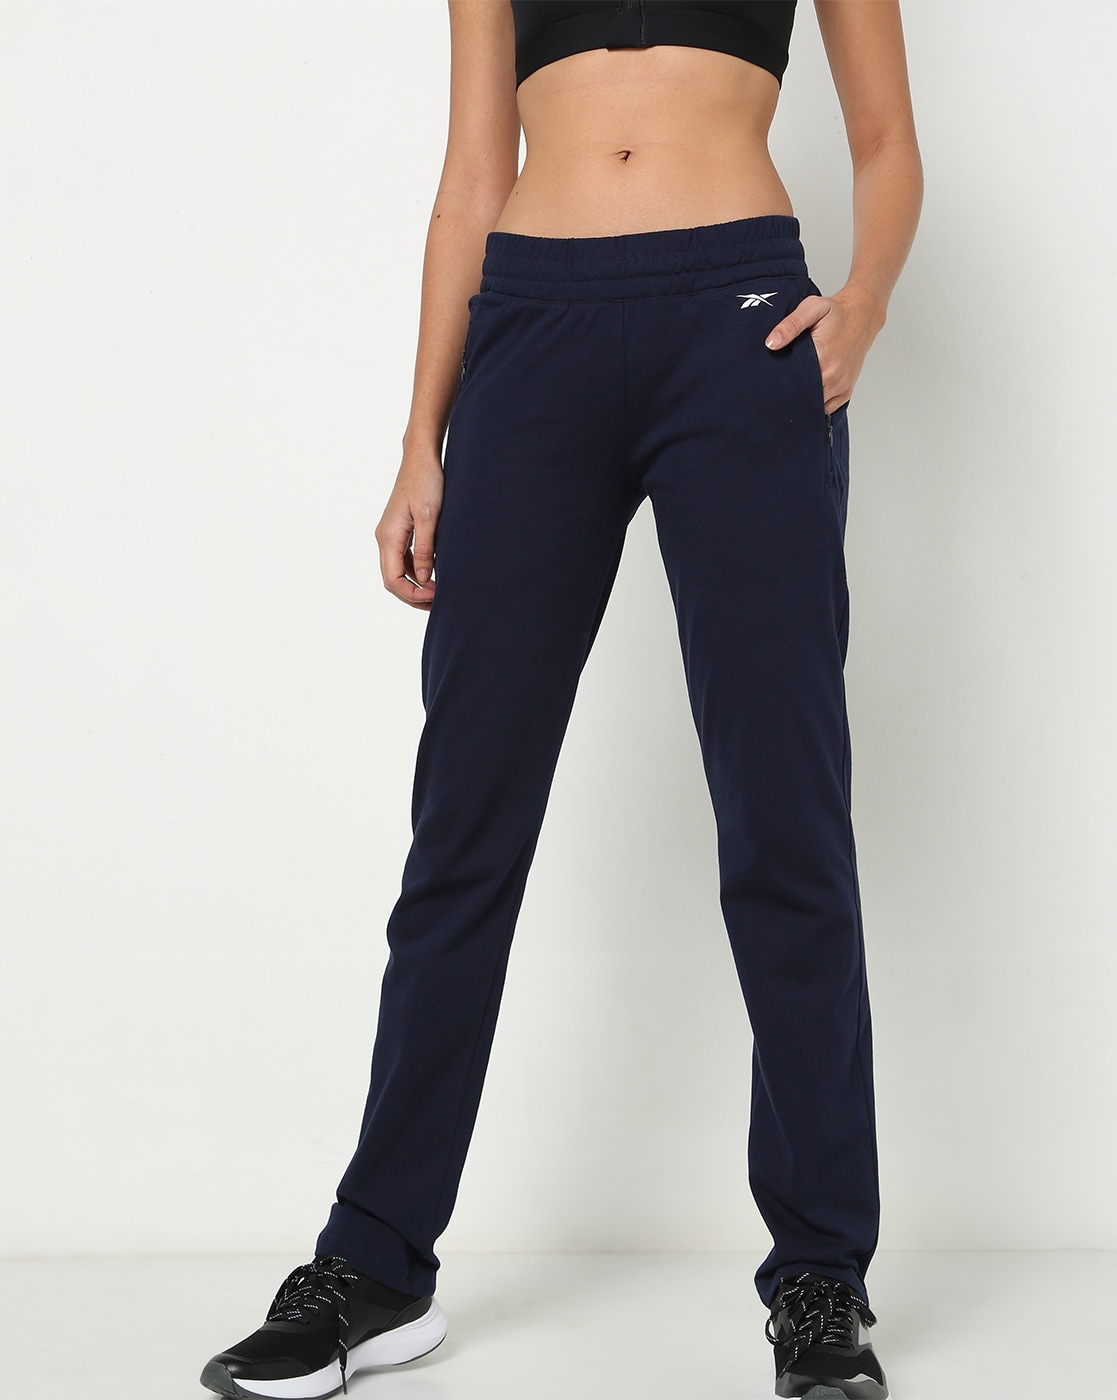 Buy Navy Blue Track Pants for Women by Reebok Online